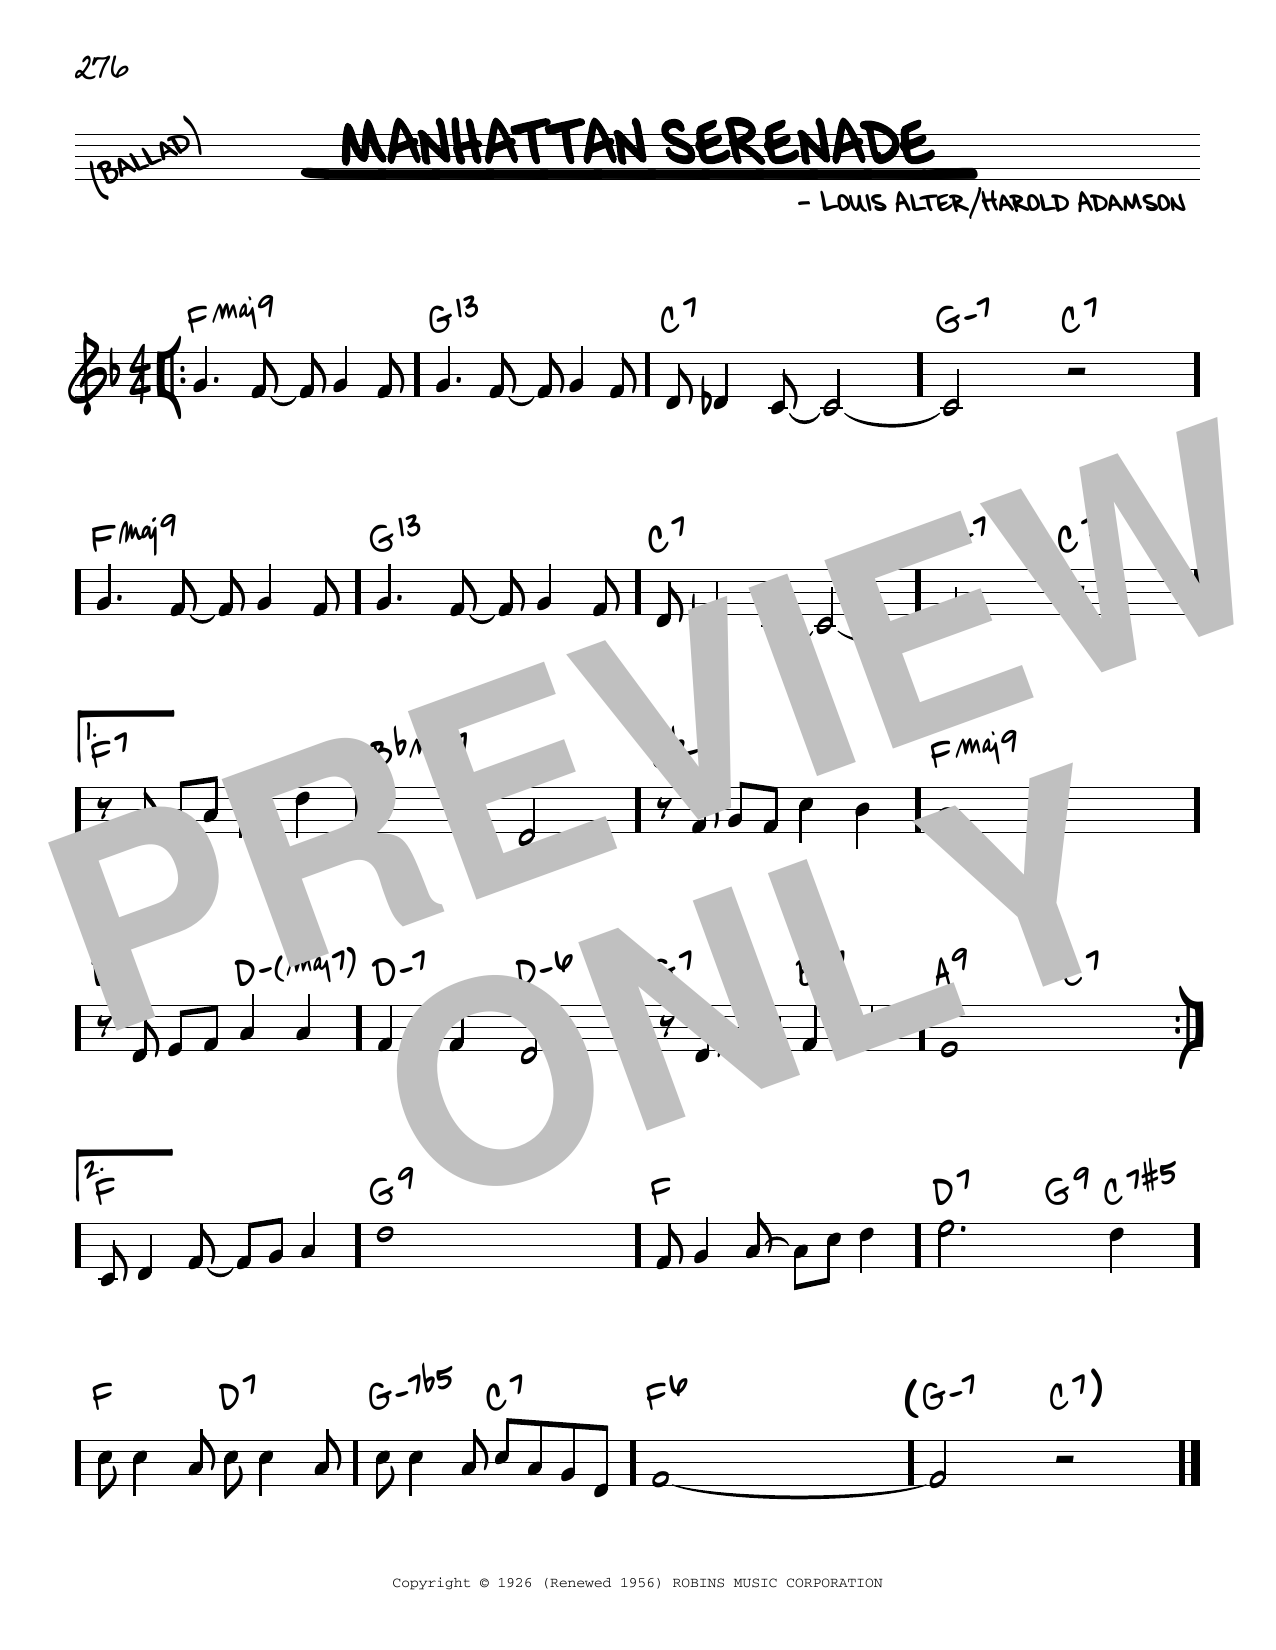 Download Harold Adamson Manhattan Serenade Sheet Music